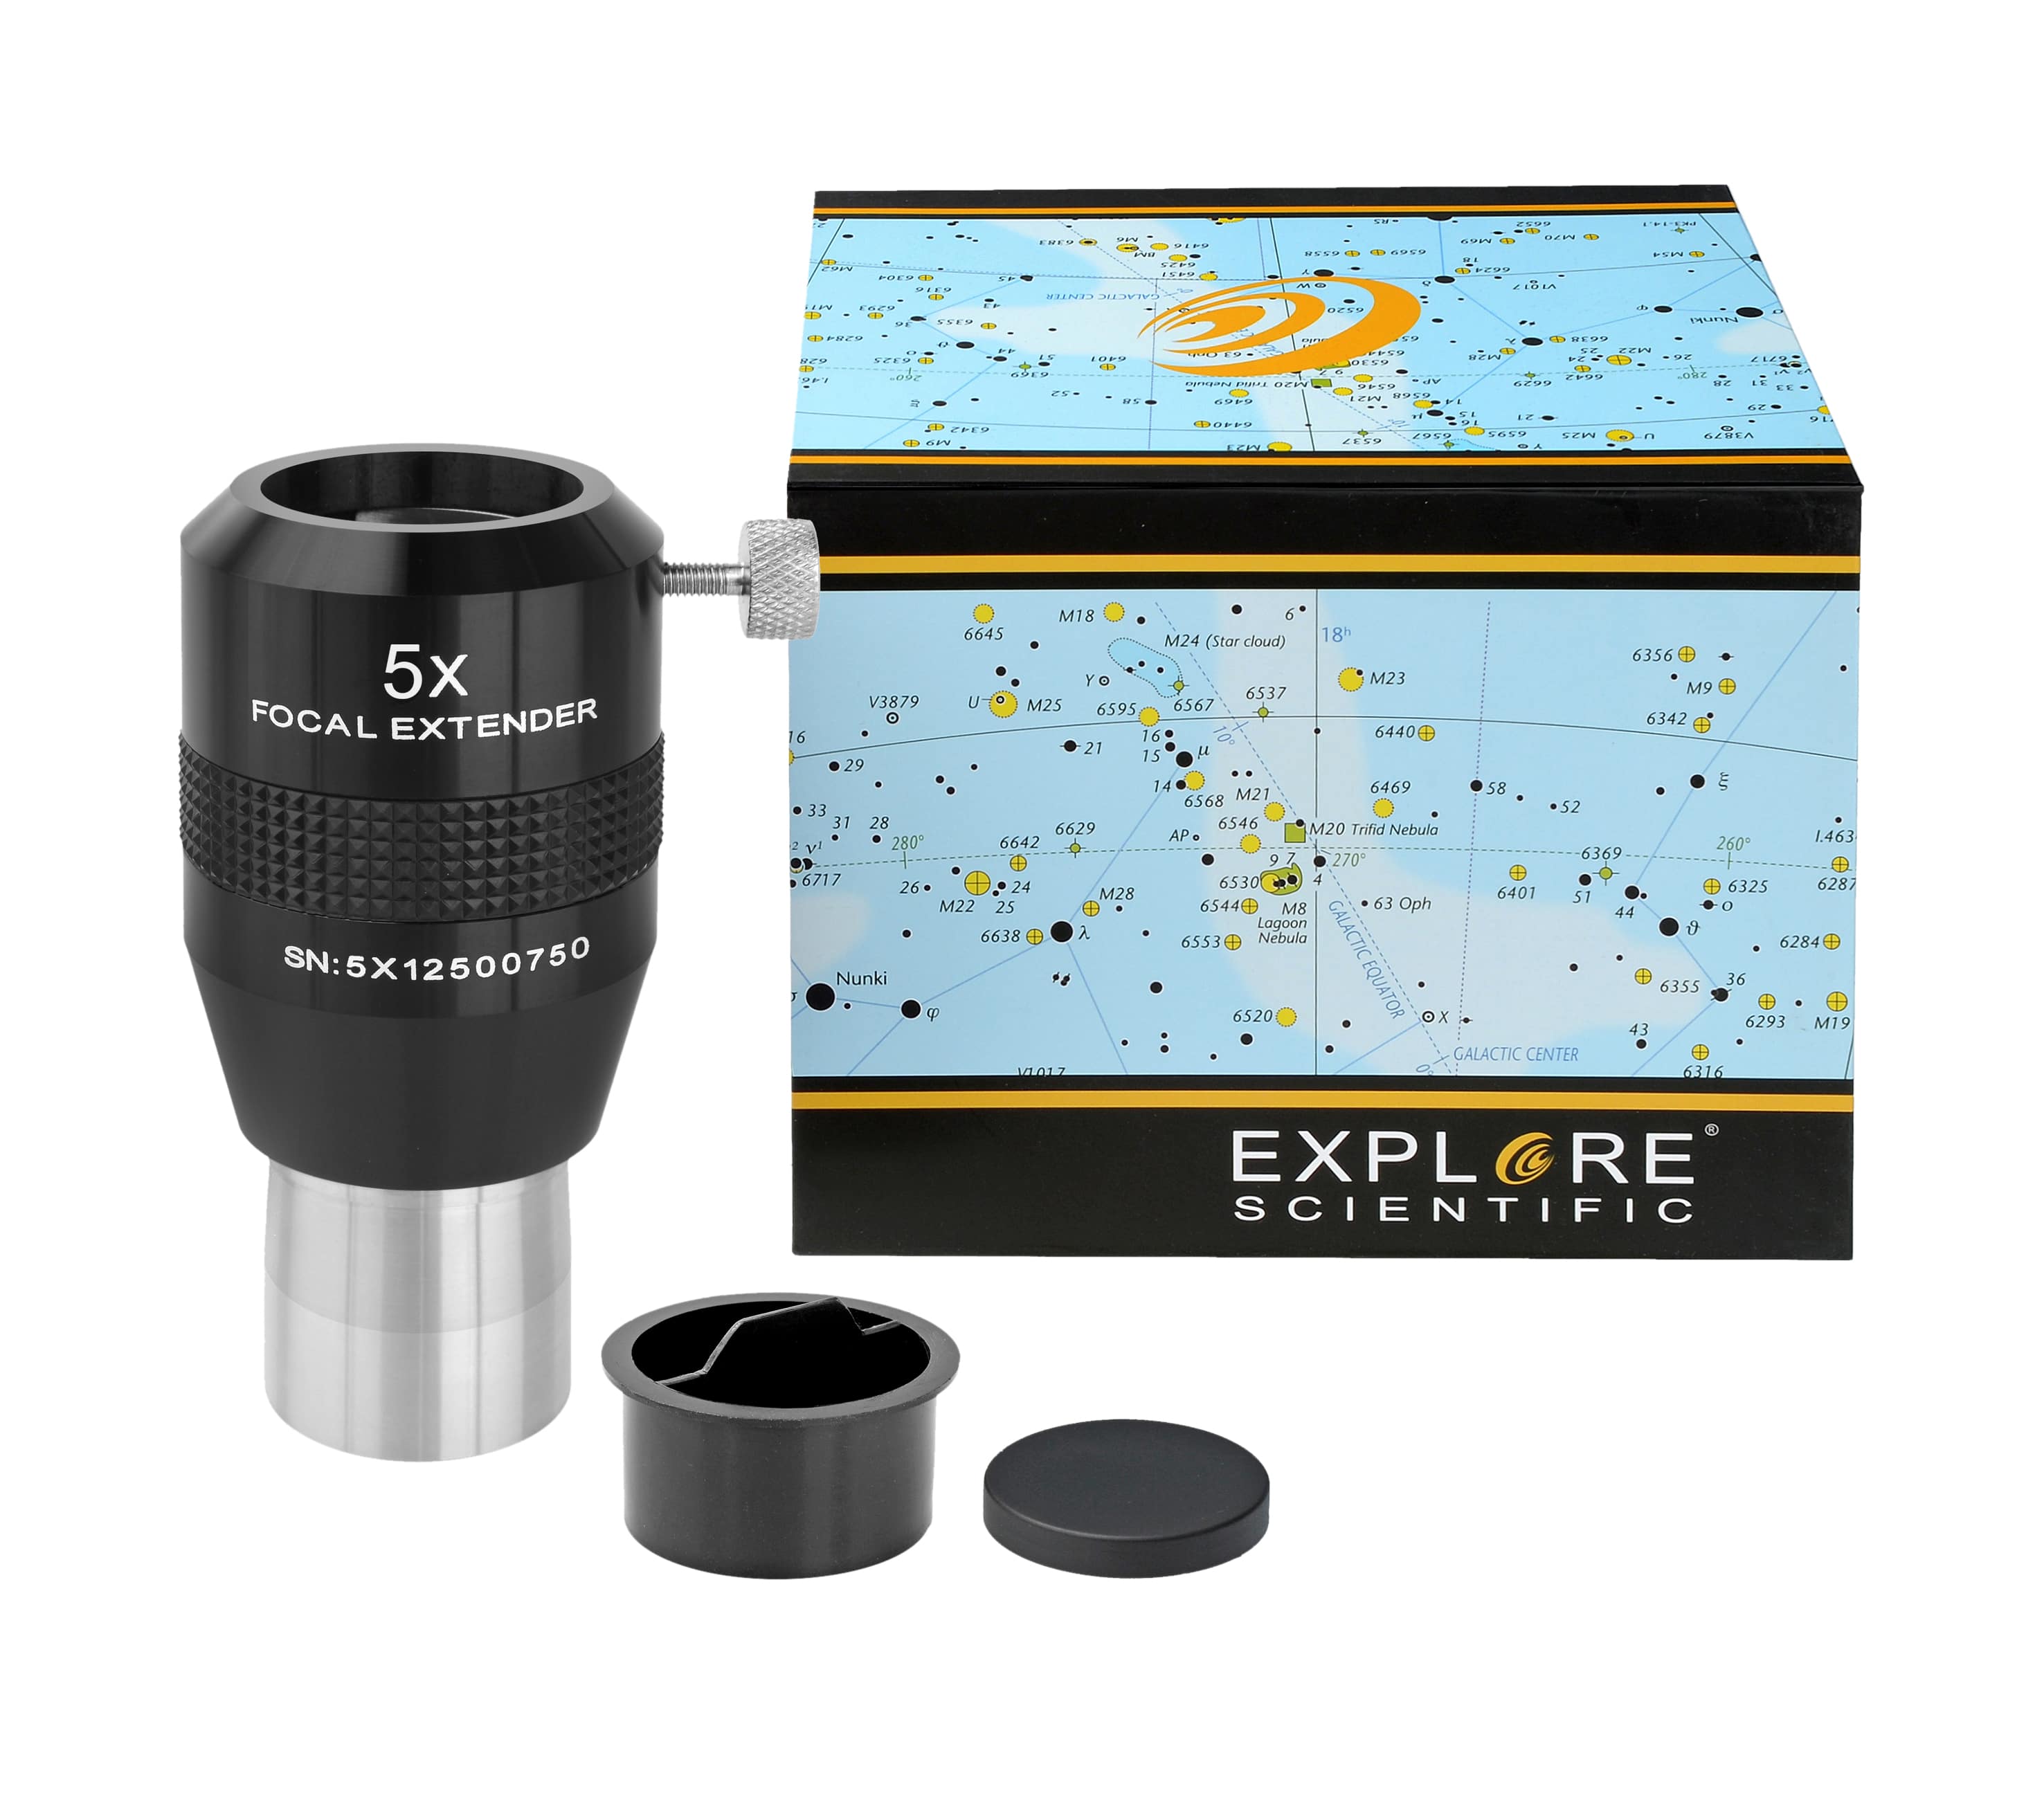   Four-lens Premium-Teleextender with extension factor 5x [EN]  